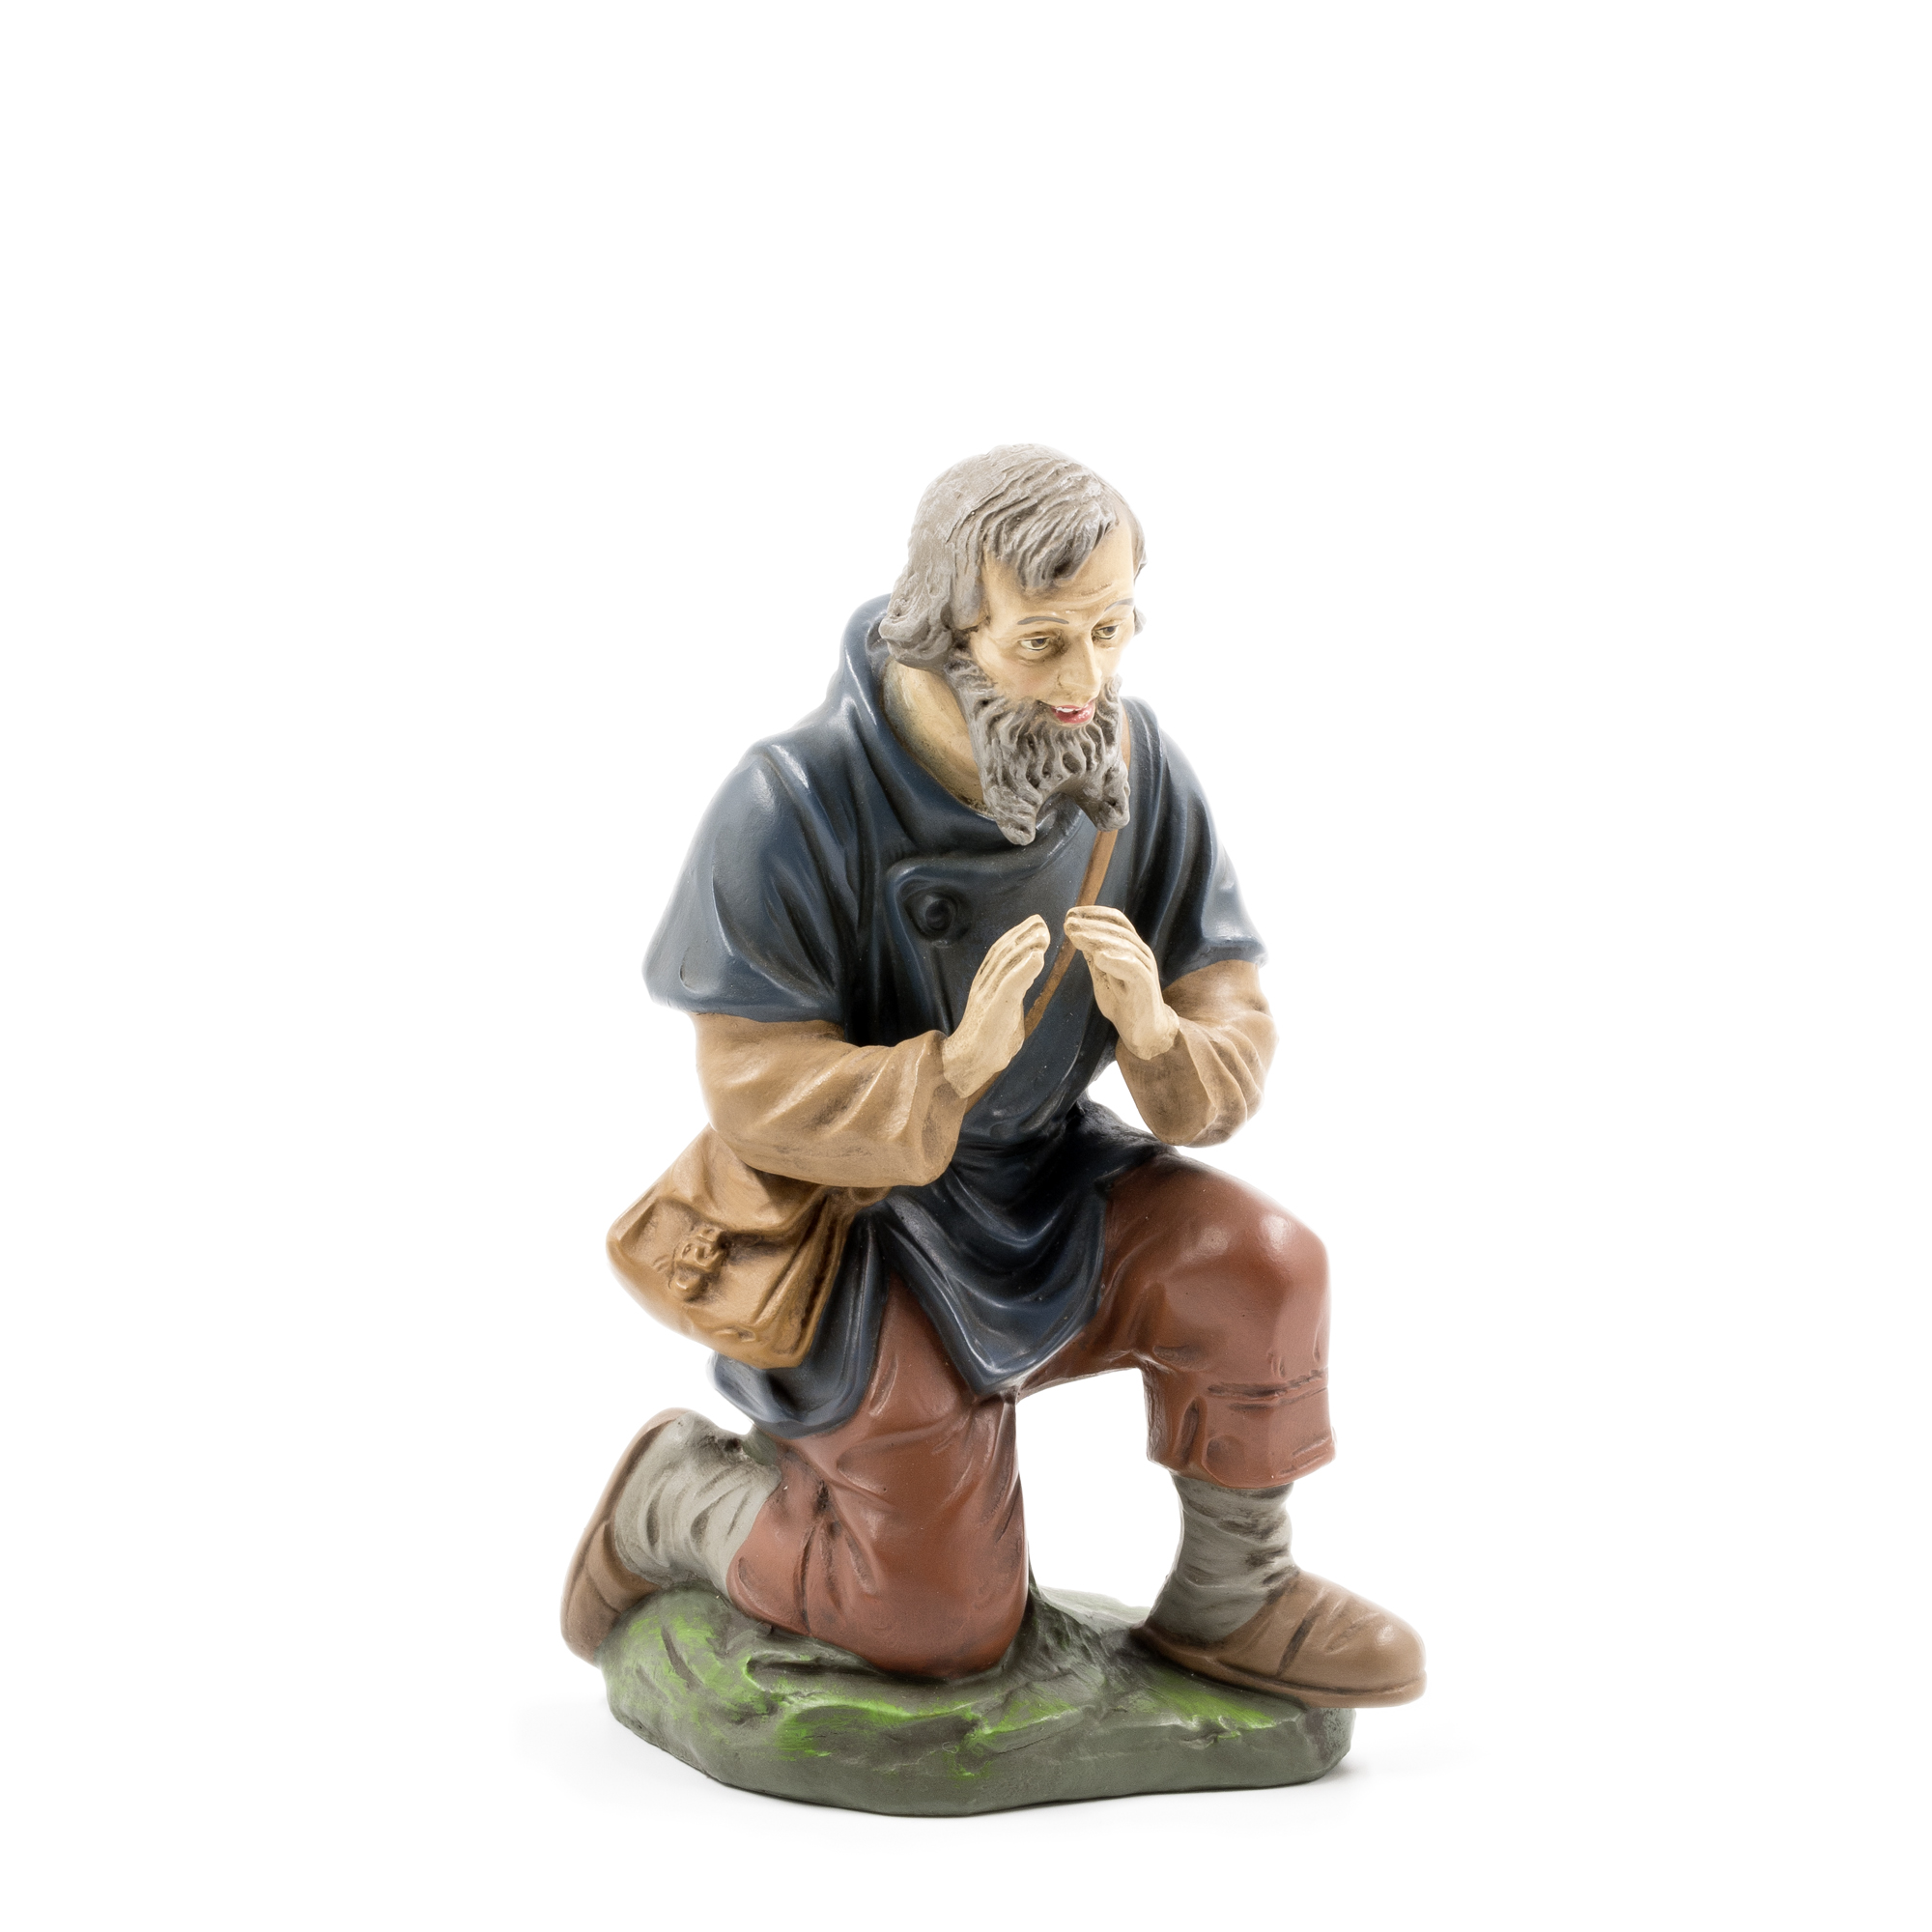 Praying shepherd (kneeling) to 8.5 in. figures